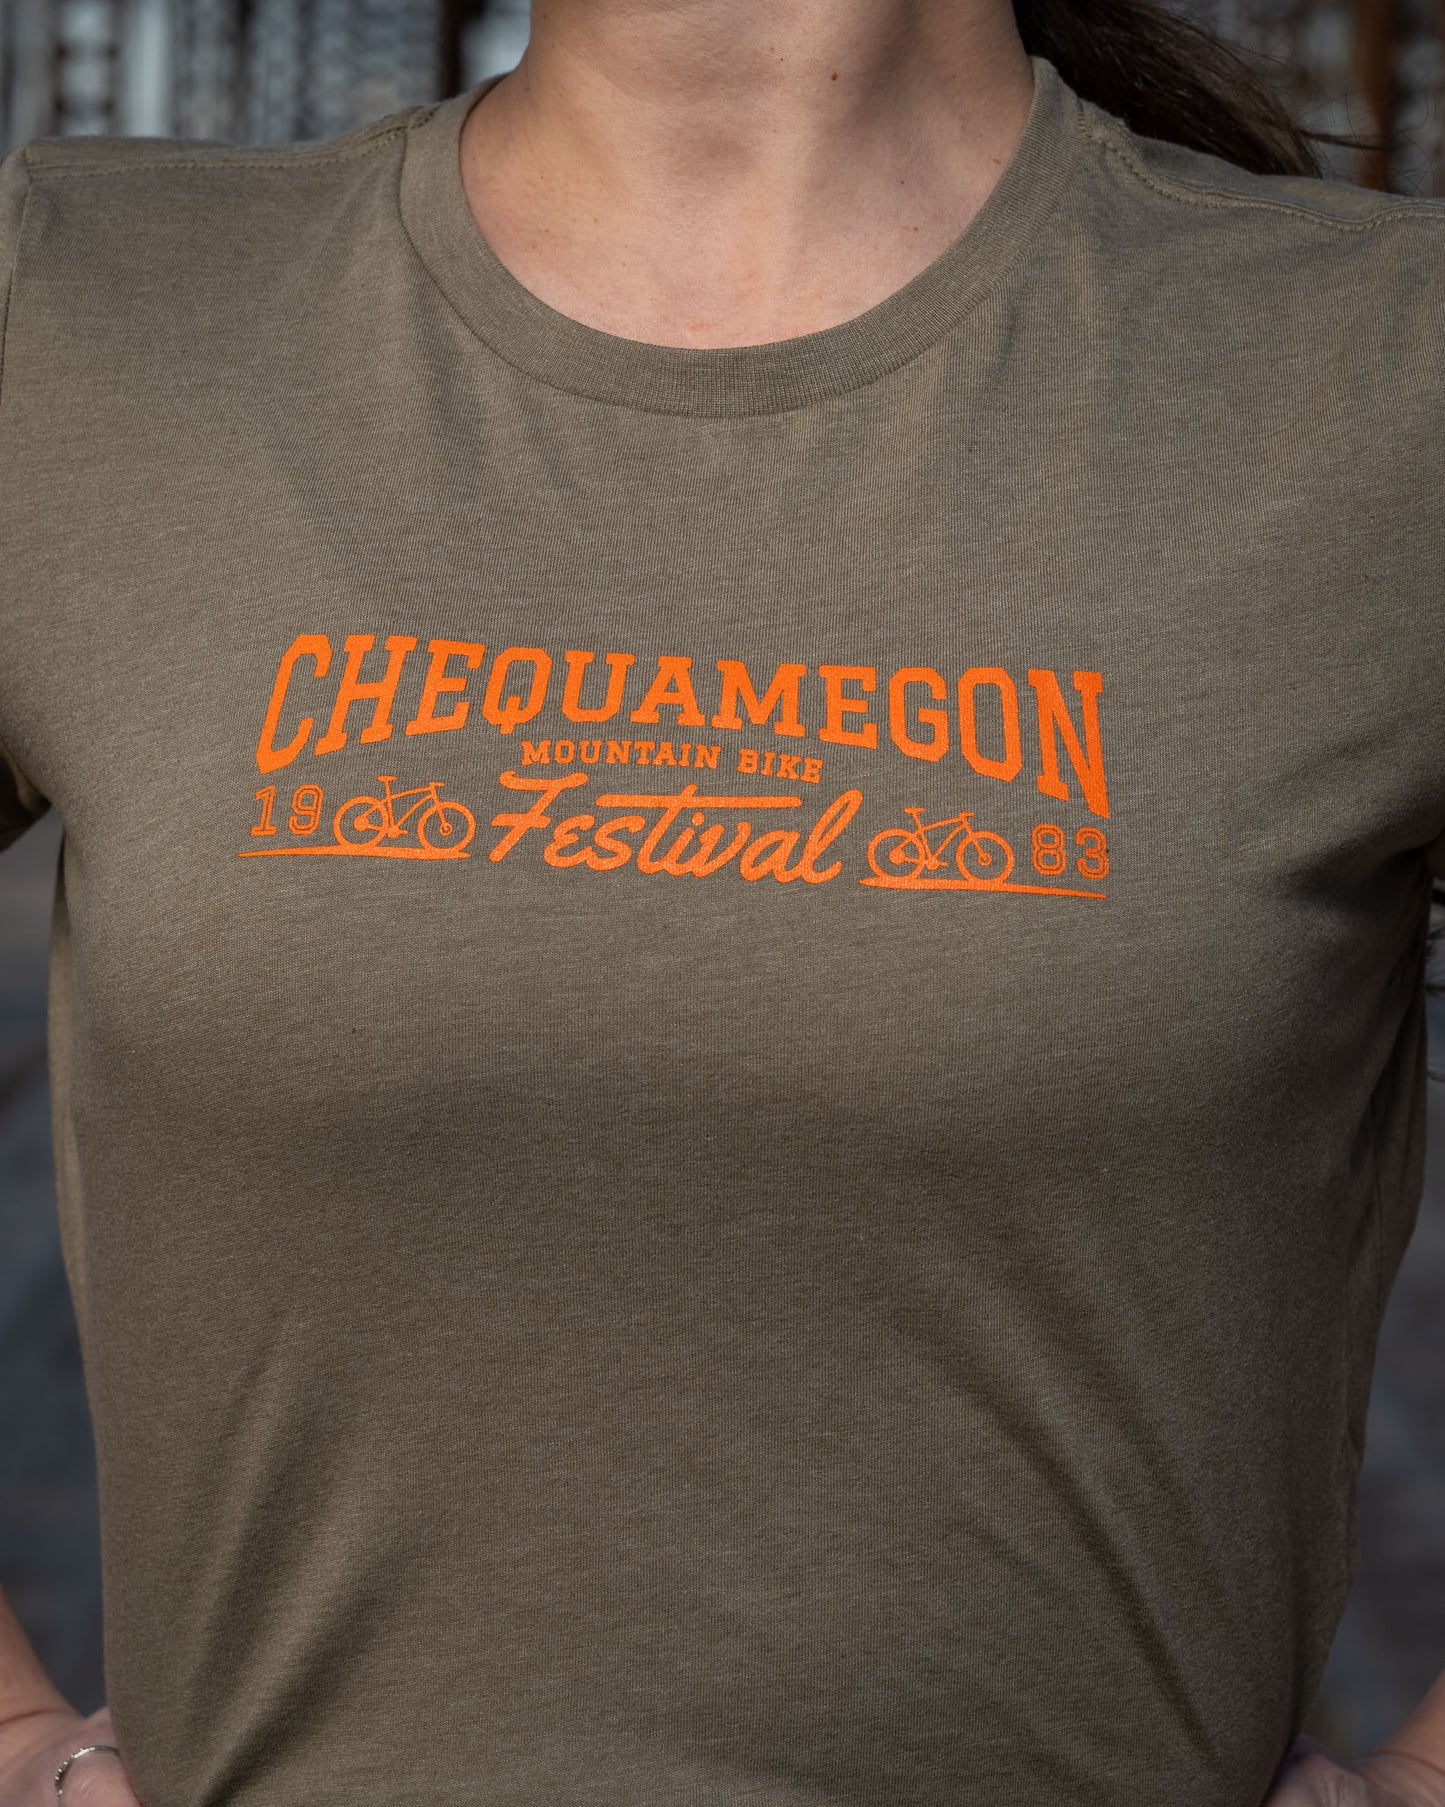 Chequamegon Women's Tee (Green)